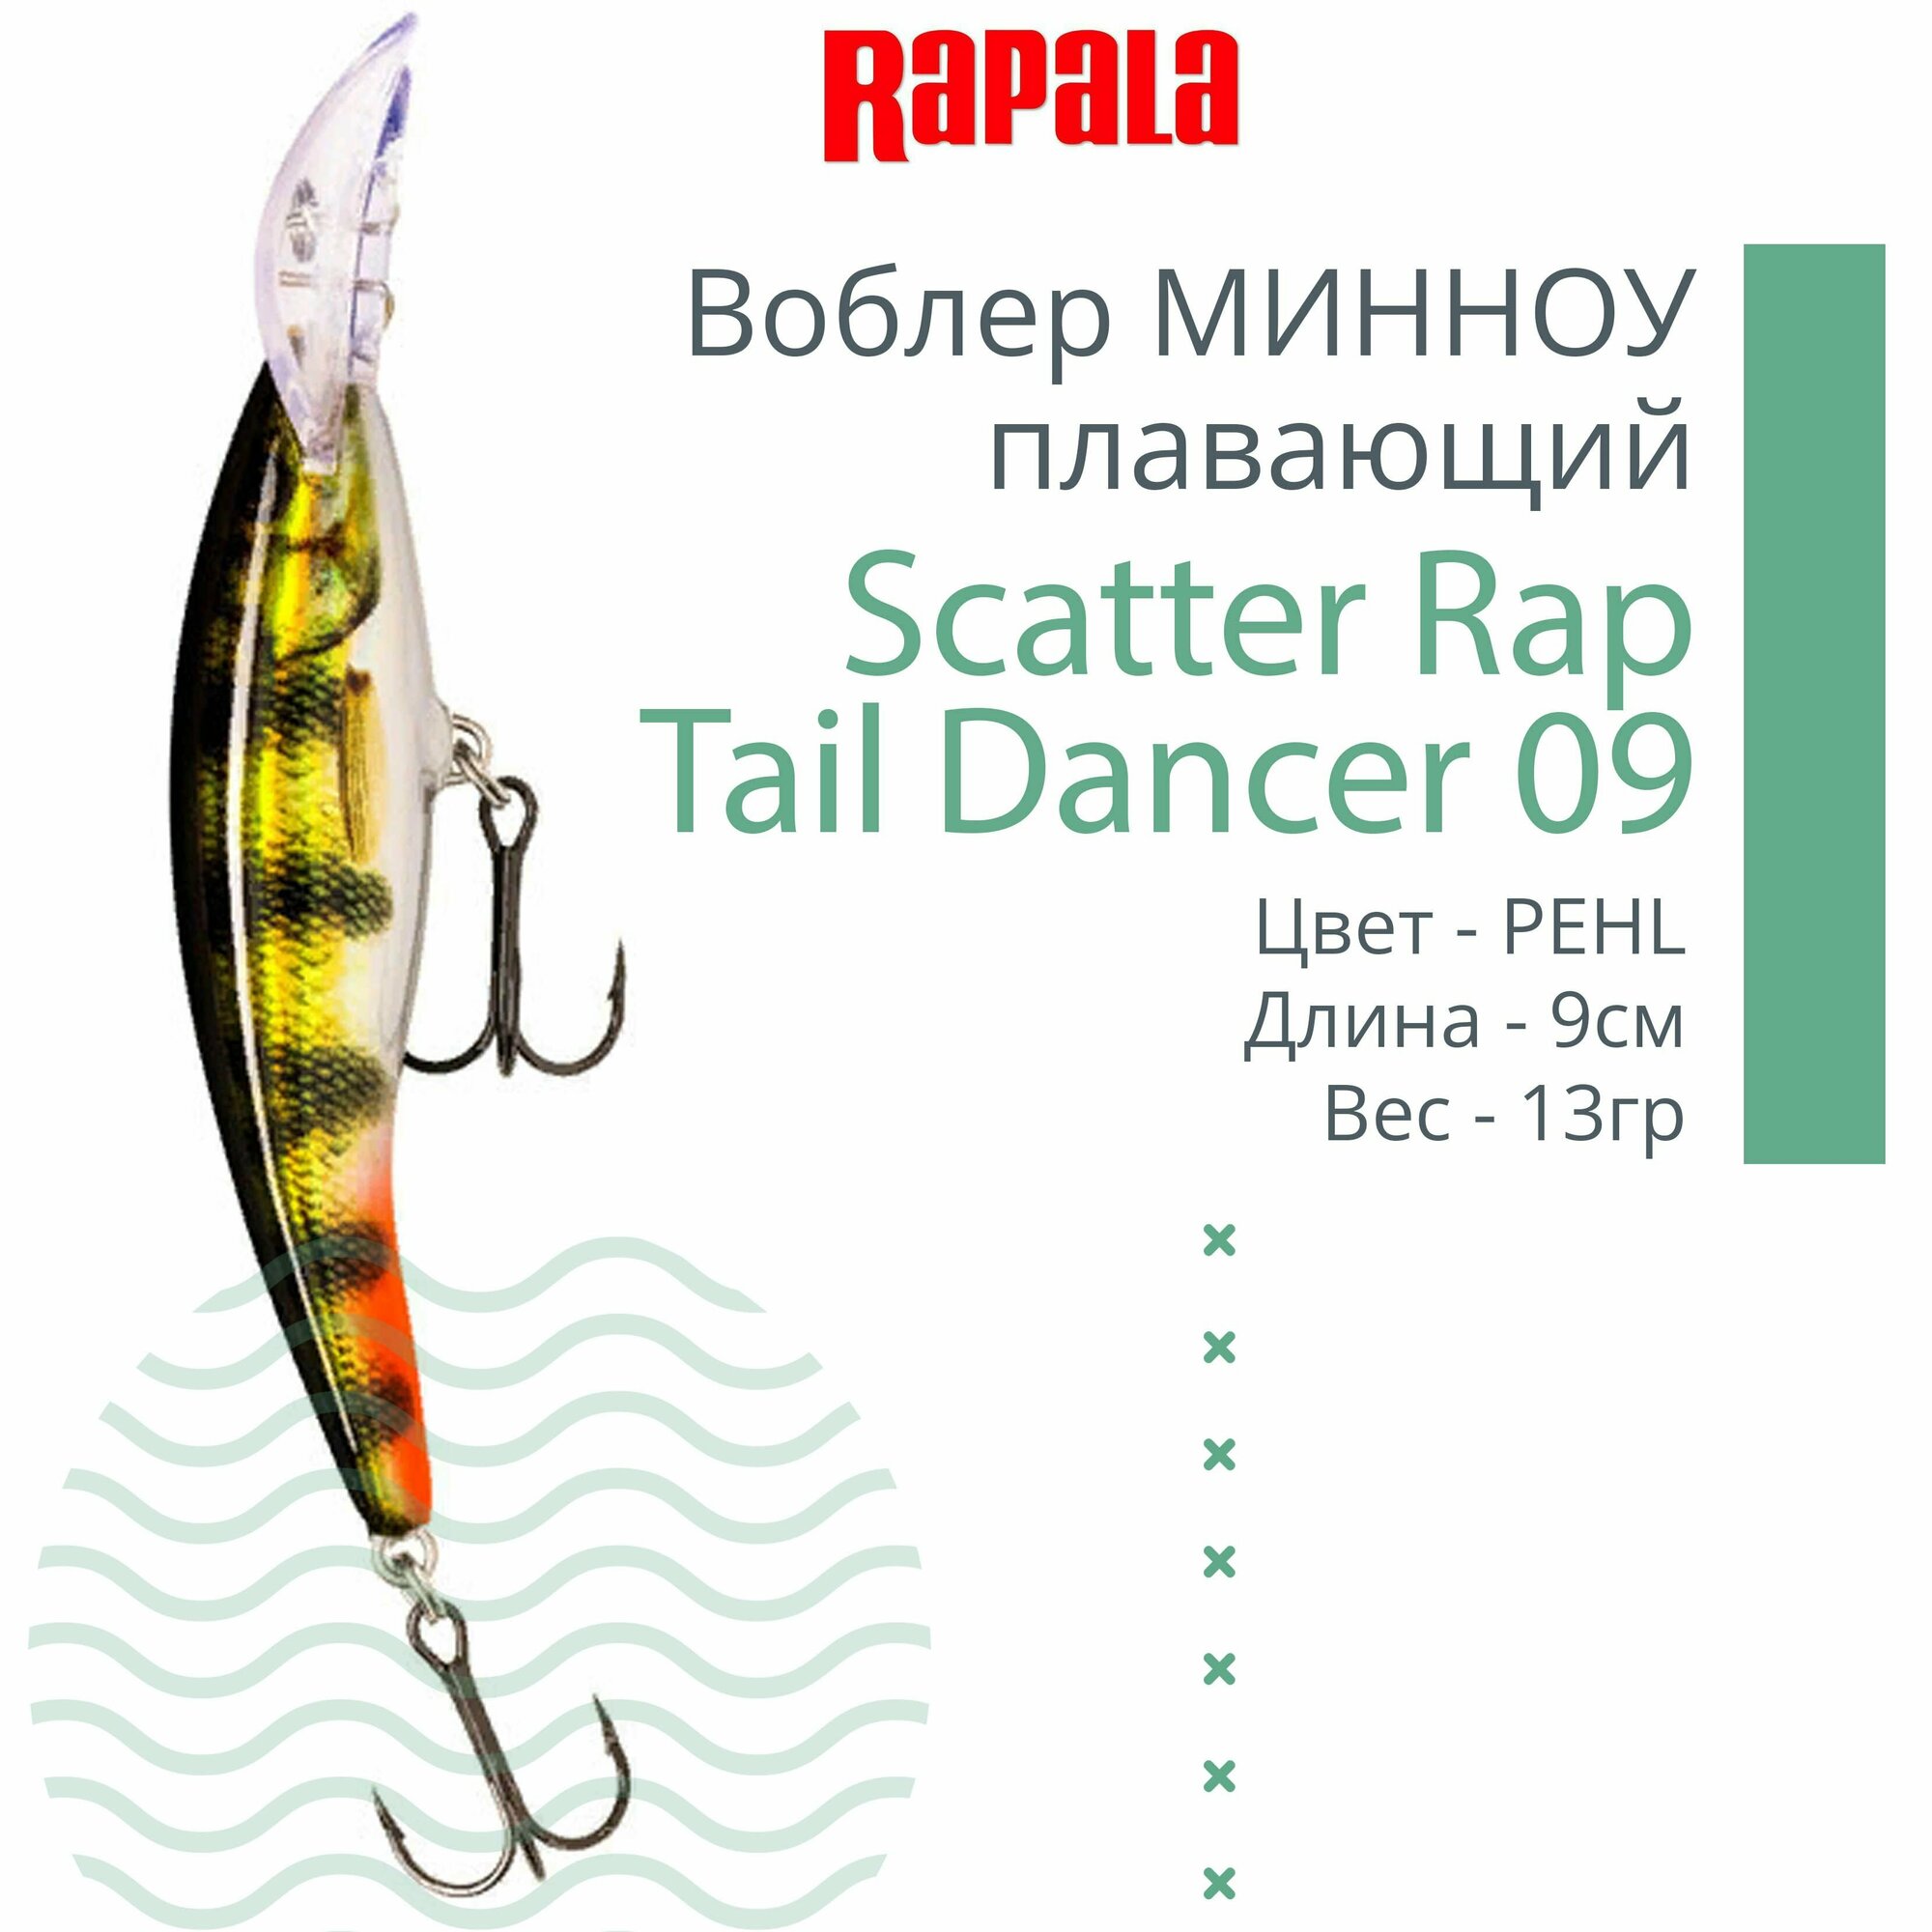 Воблер для рыбалки RAPALA Scatter Rap Tail Dancer 09, 9см, 13гр, цвет PEHL, плавающий